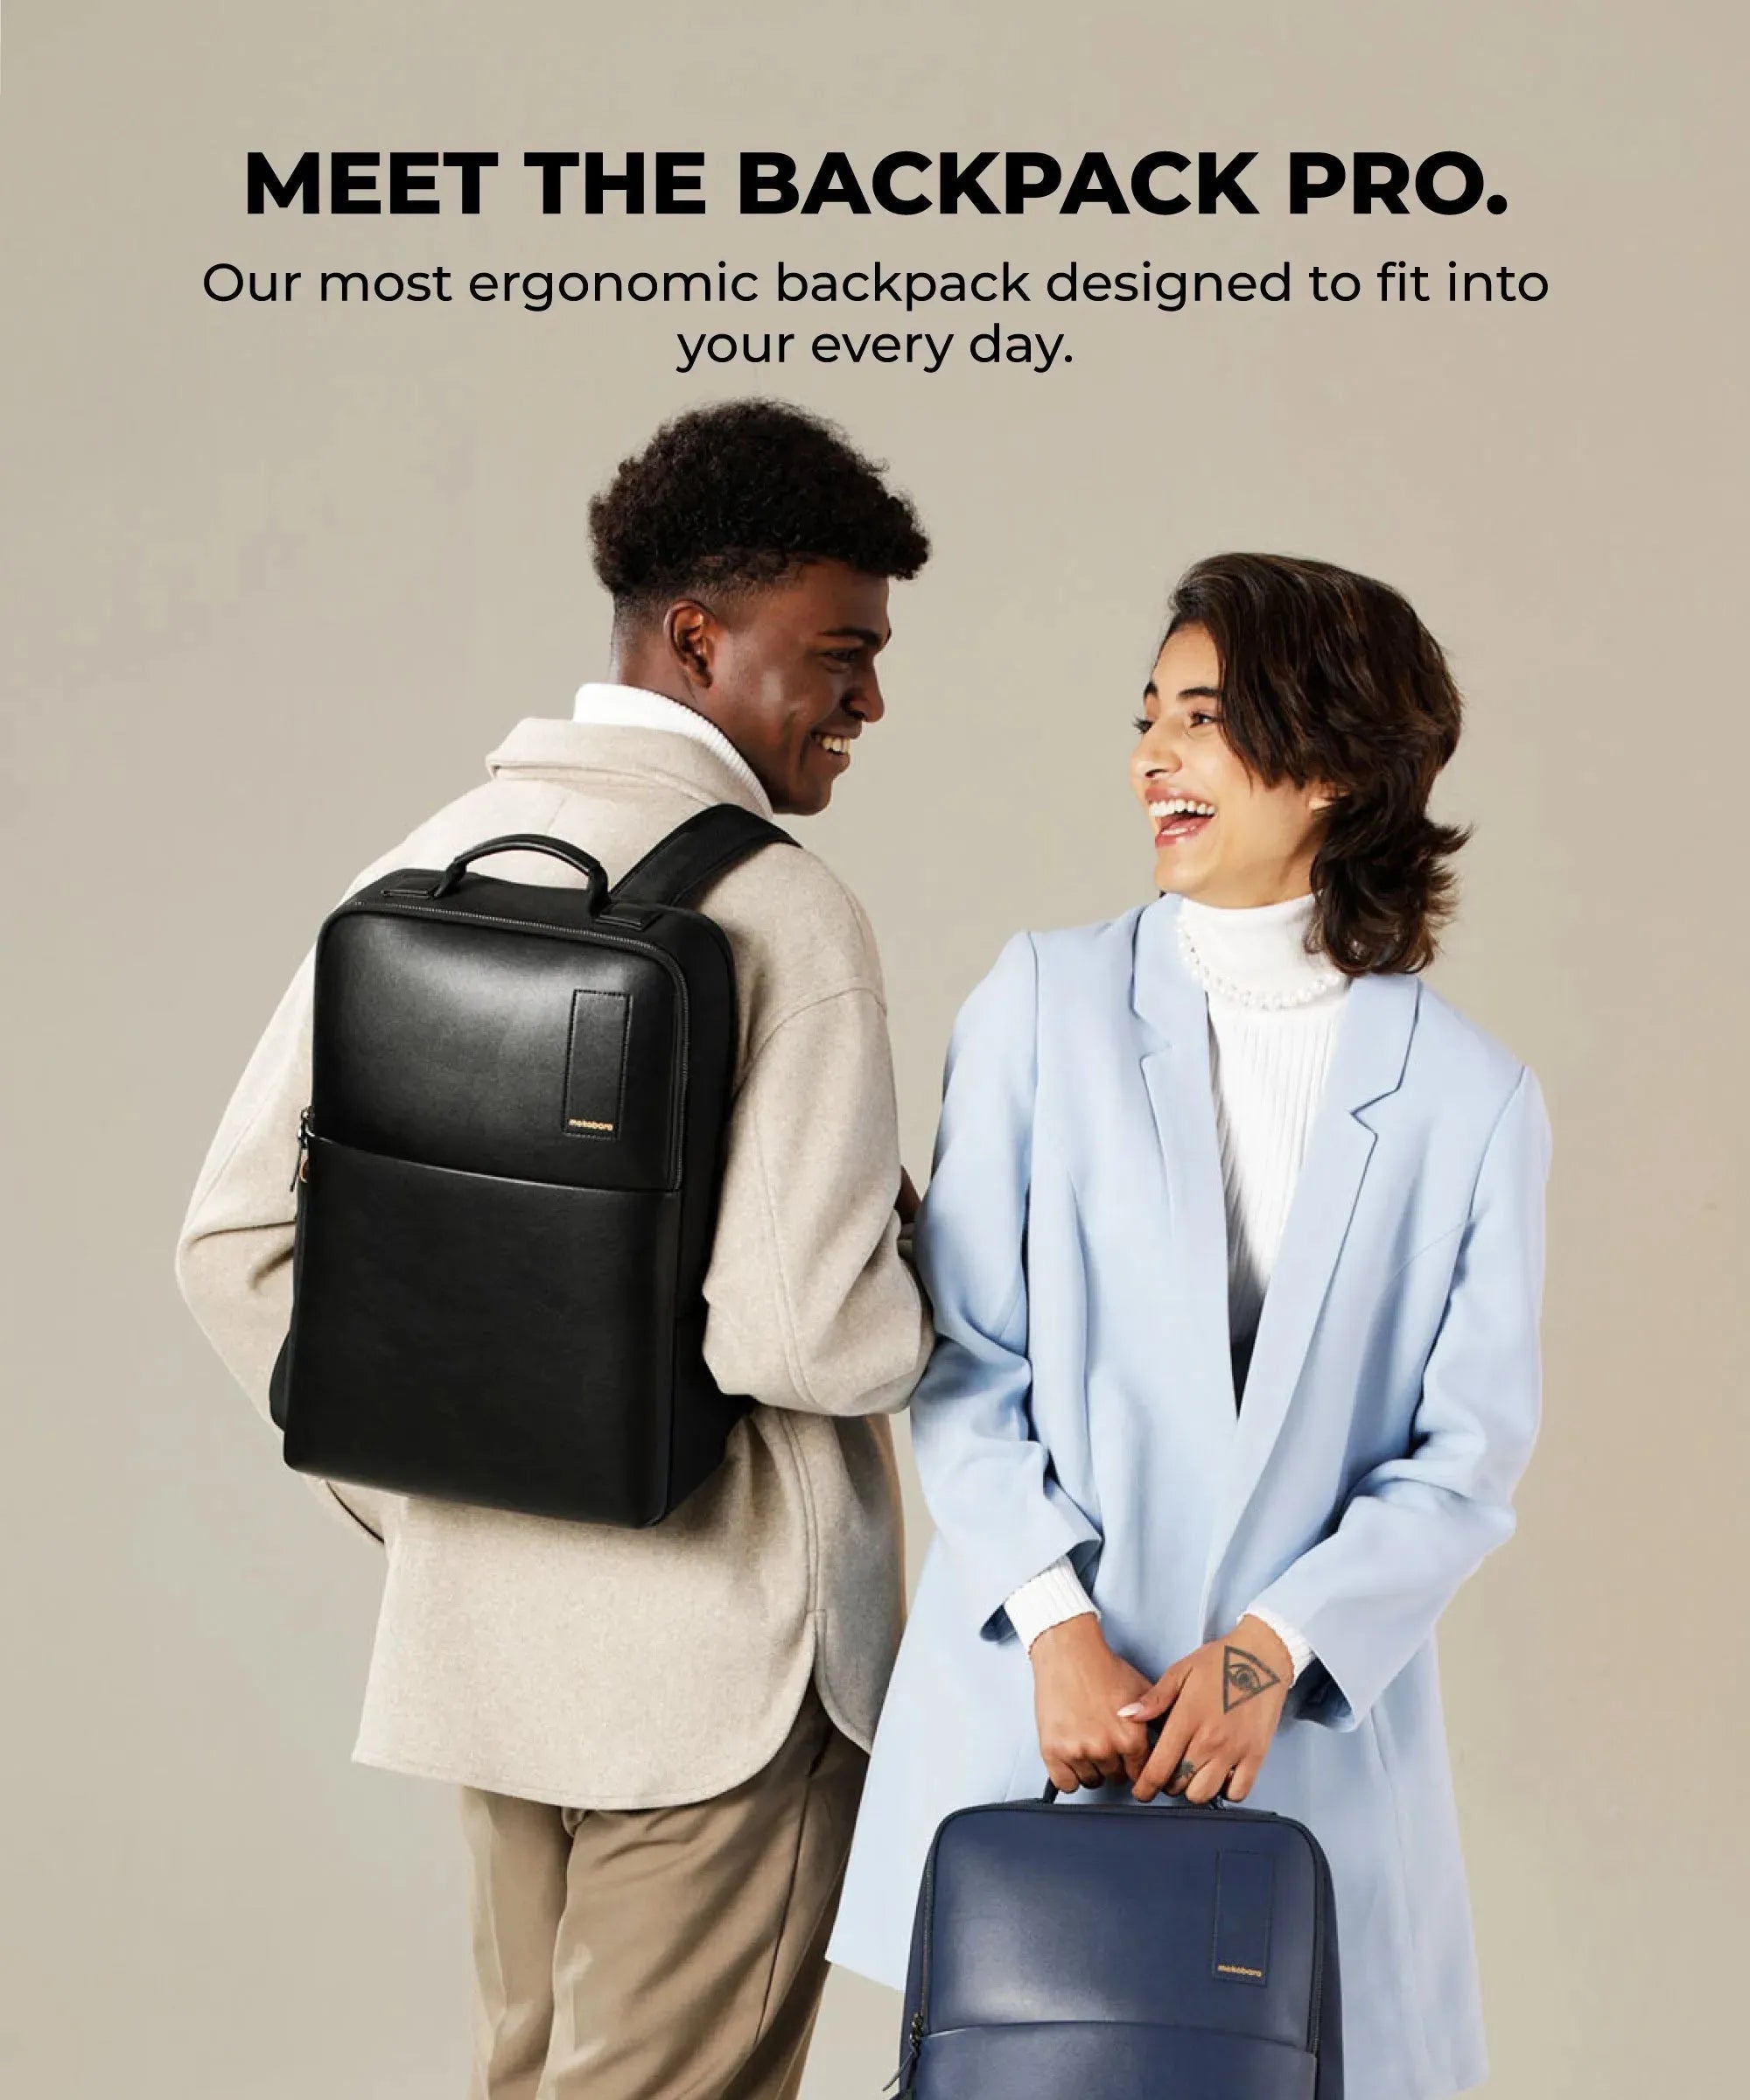 Color_Deep Black | The Backpack Pro